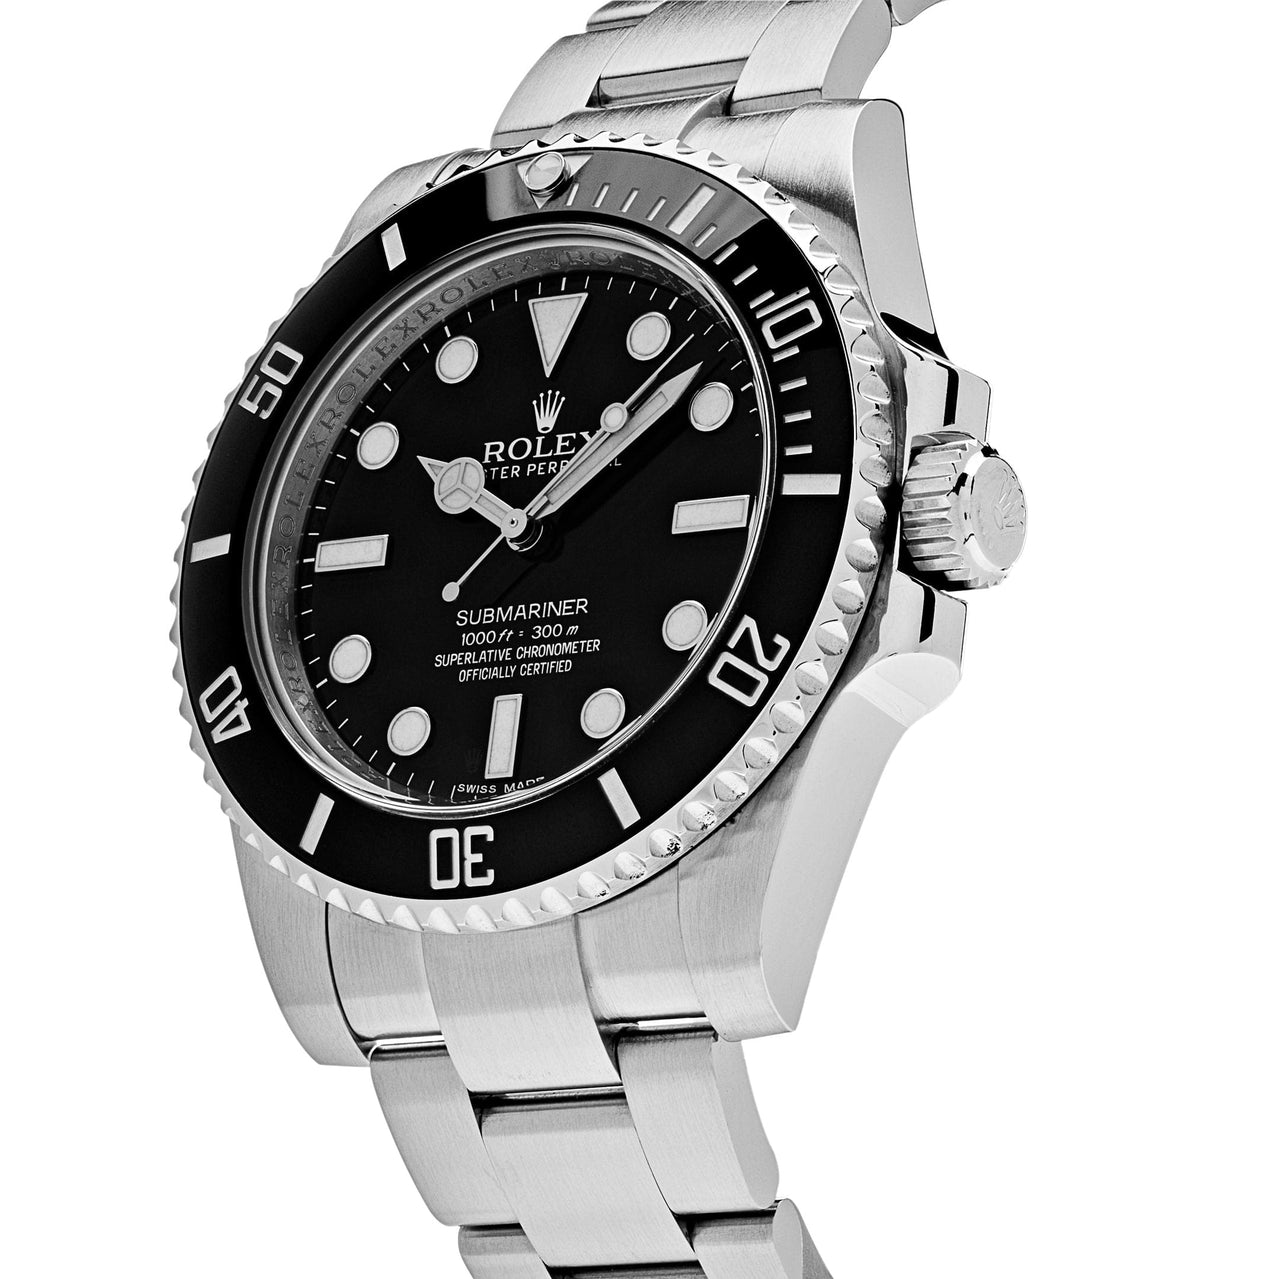 Rolex Submariner No-Date 40 Stainless Steel Black Dial 114060 (Draft 2013) wrist aficionado